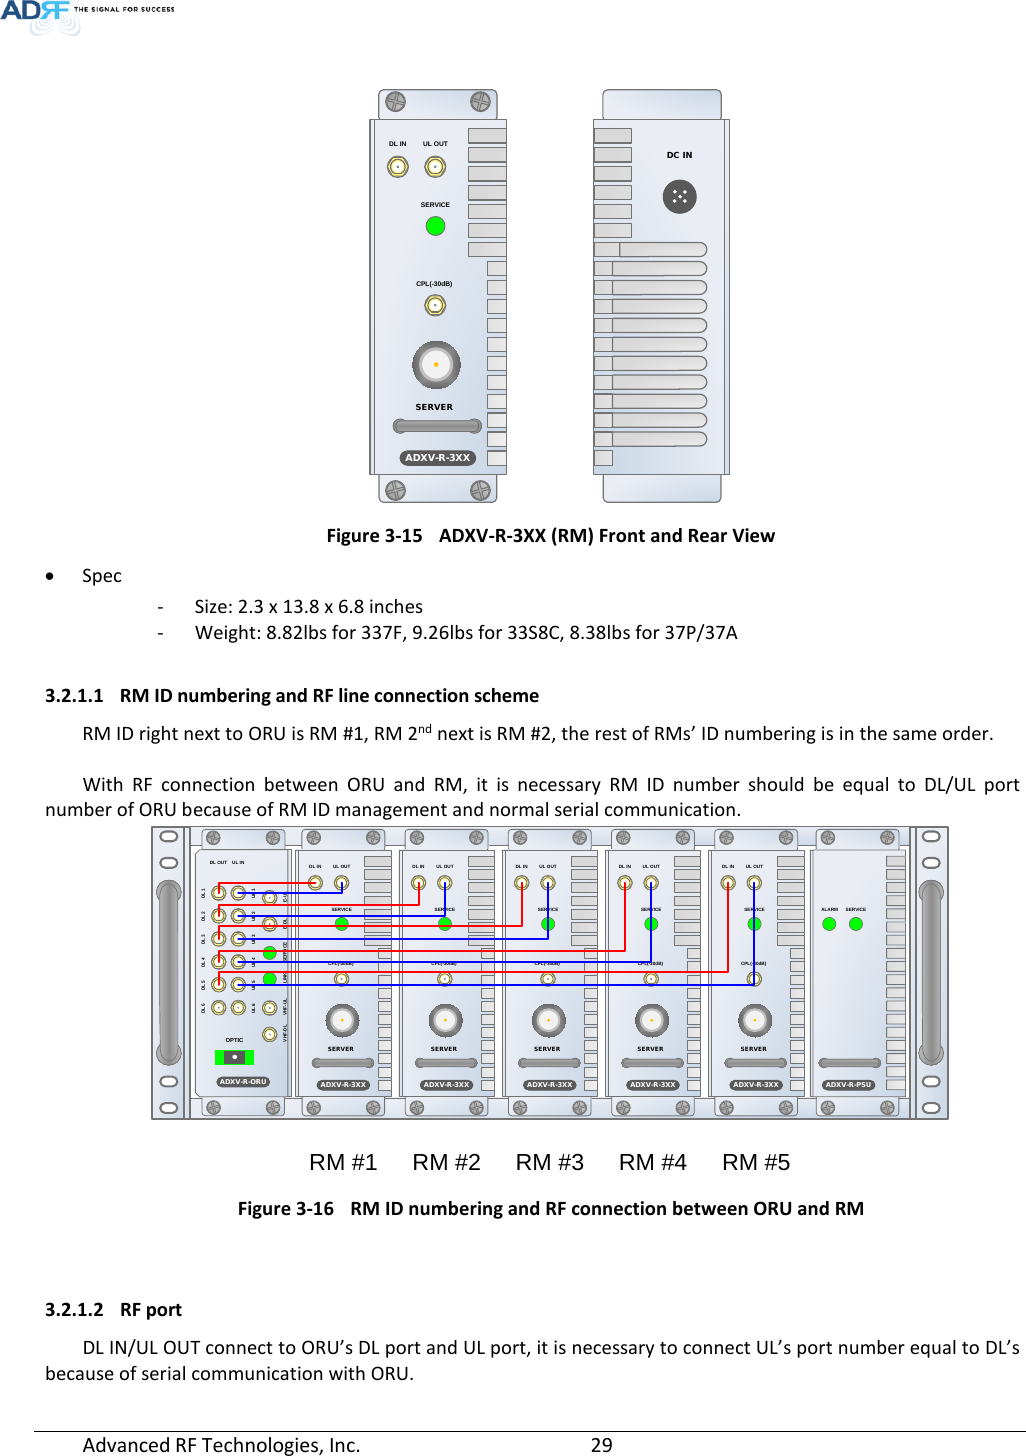 Page 29 of ADRF KOREA ADXV DAS(Distributed Antenna System) User Manual ADXV DAS